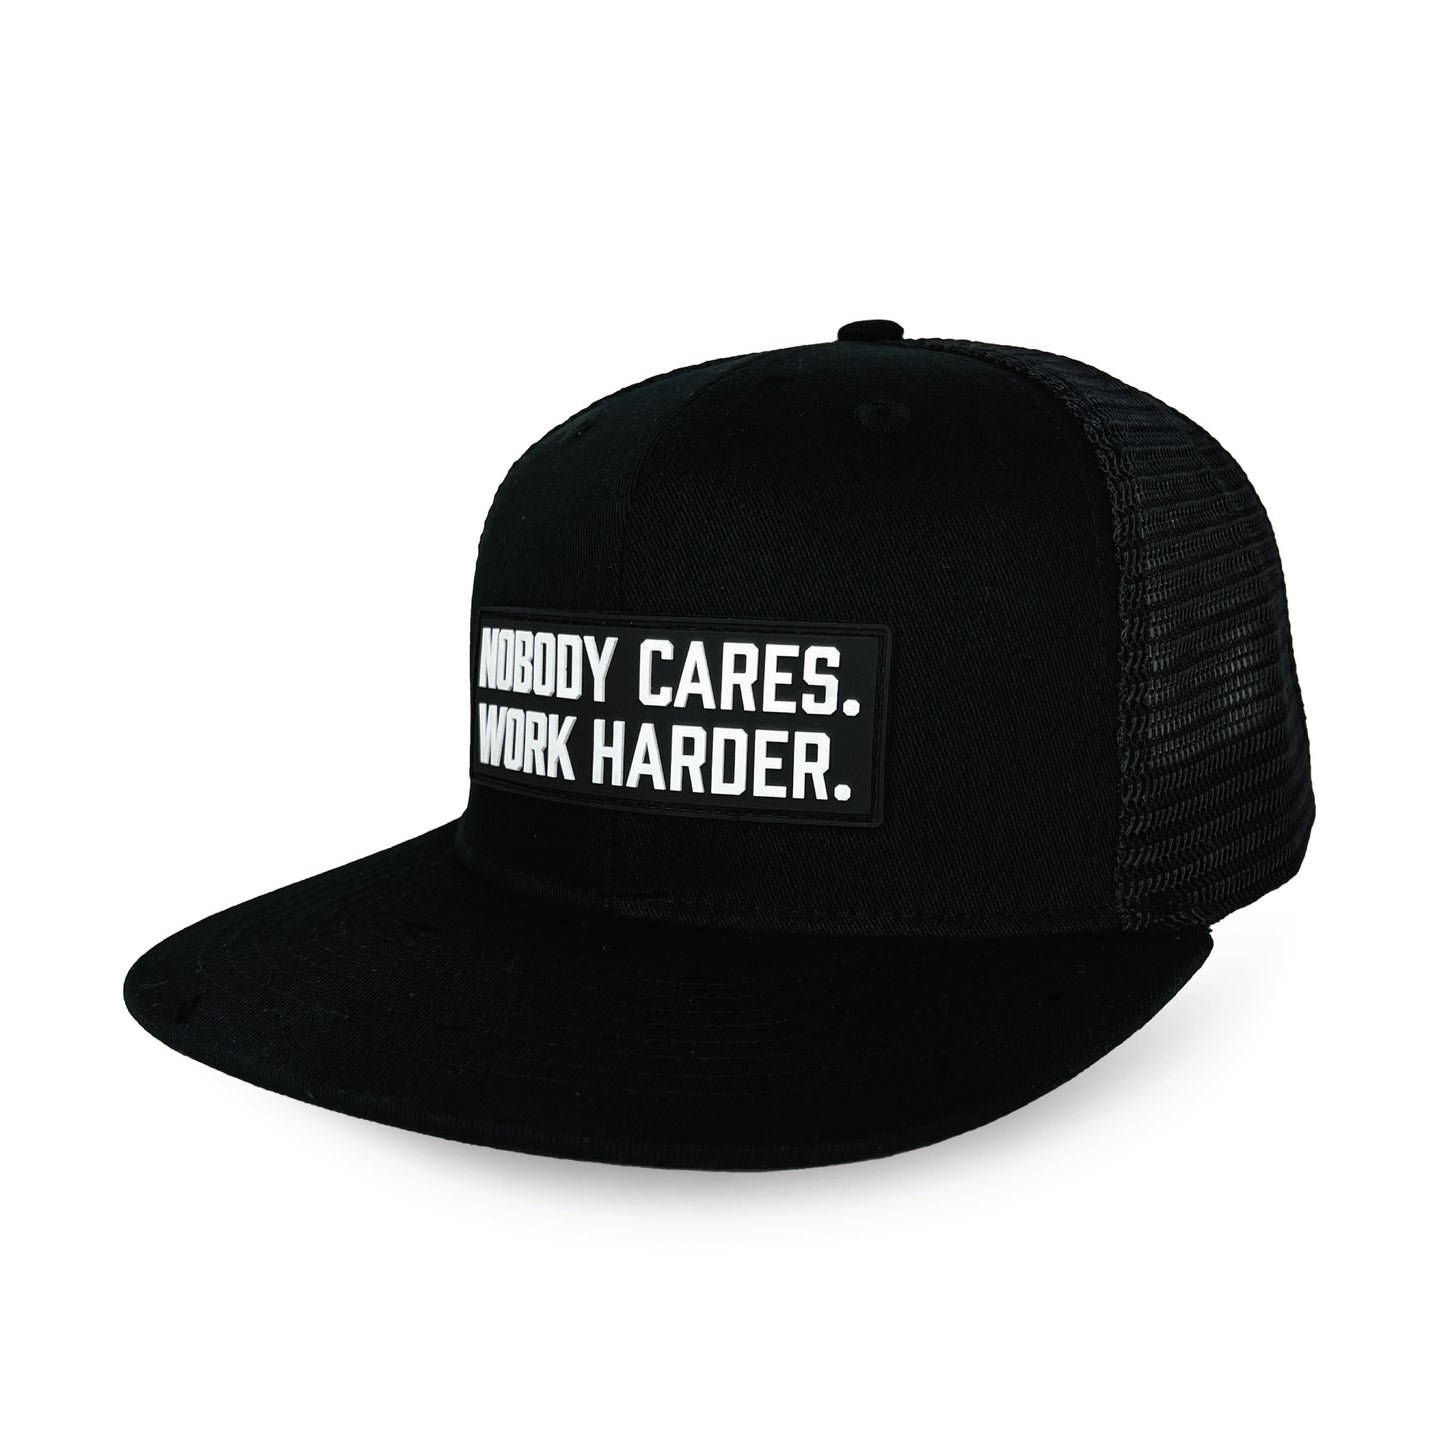 Nobody Cares. Work Harder. Trucker Hat